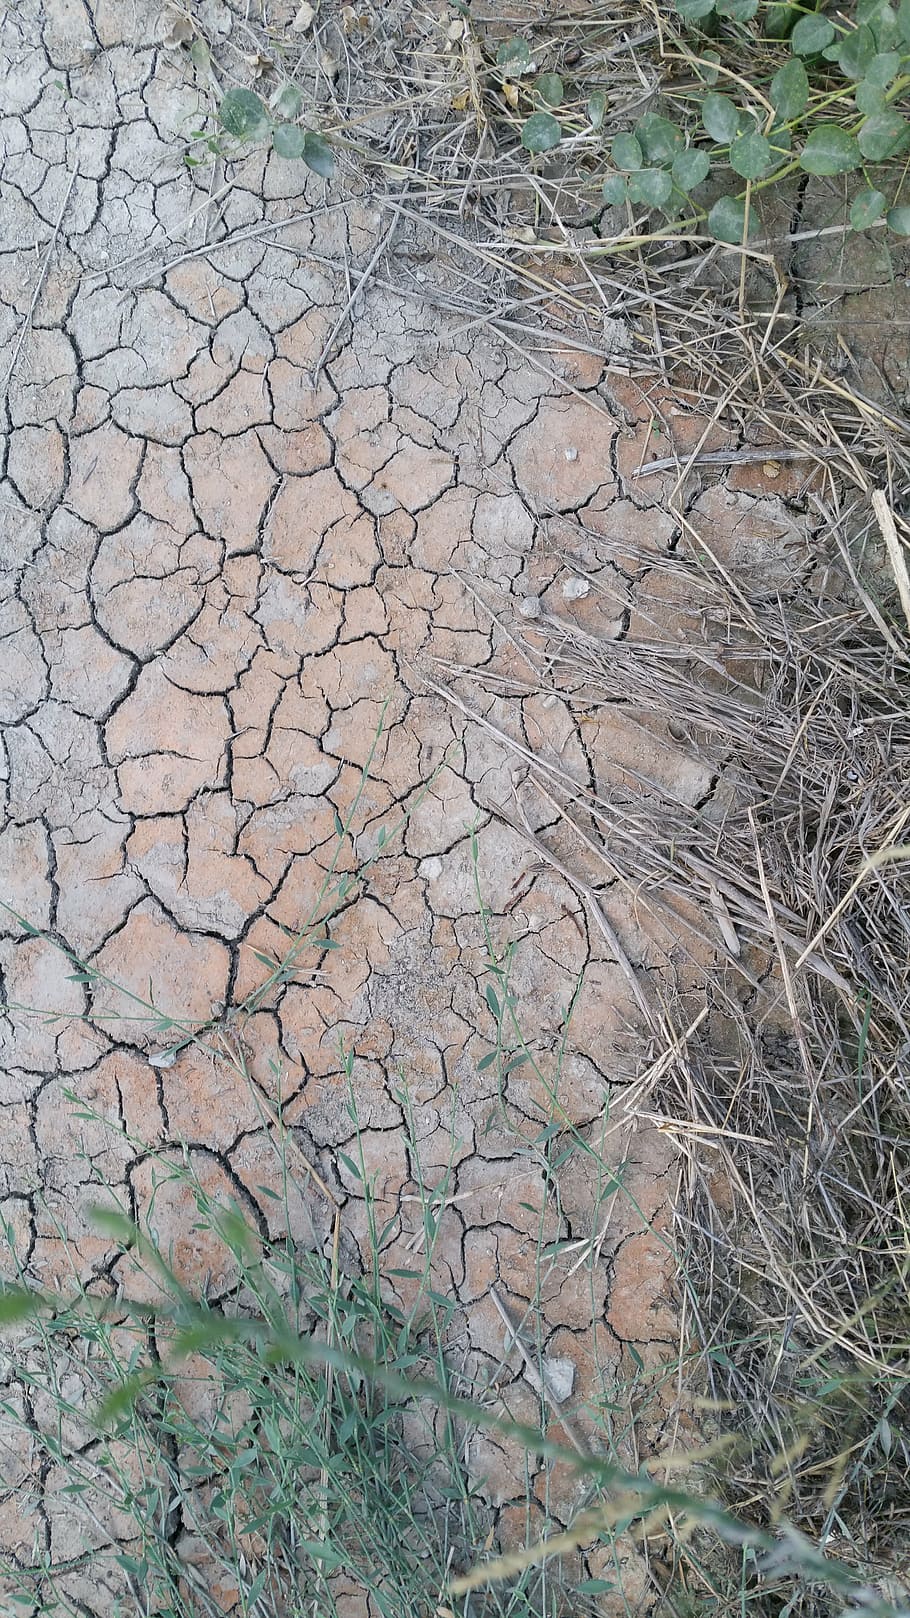 suelo, sequedad, sequía, cambio climático, creta, naturaleza, agrietado, seco, clima árido, clima